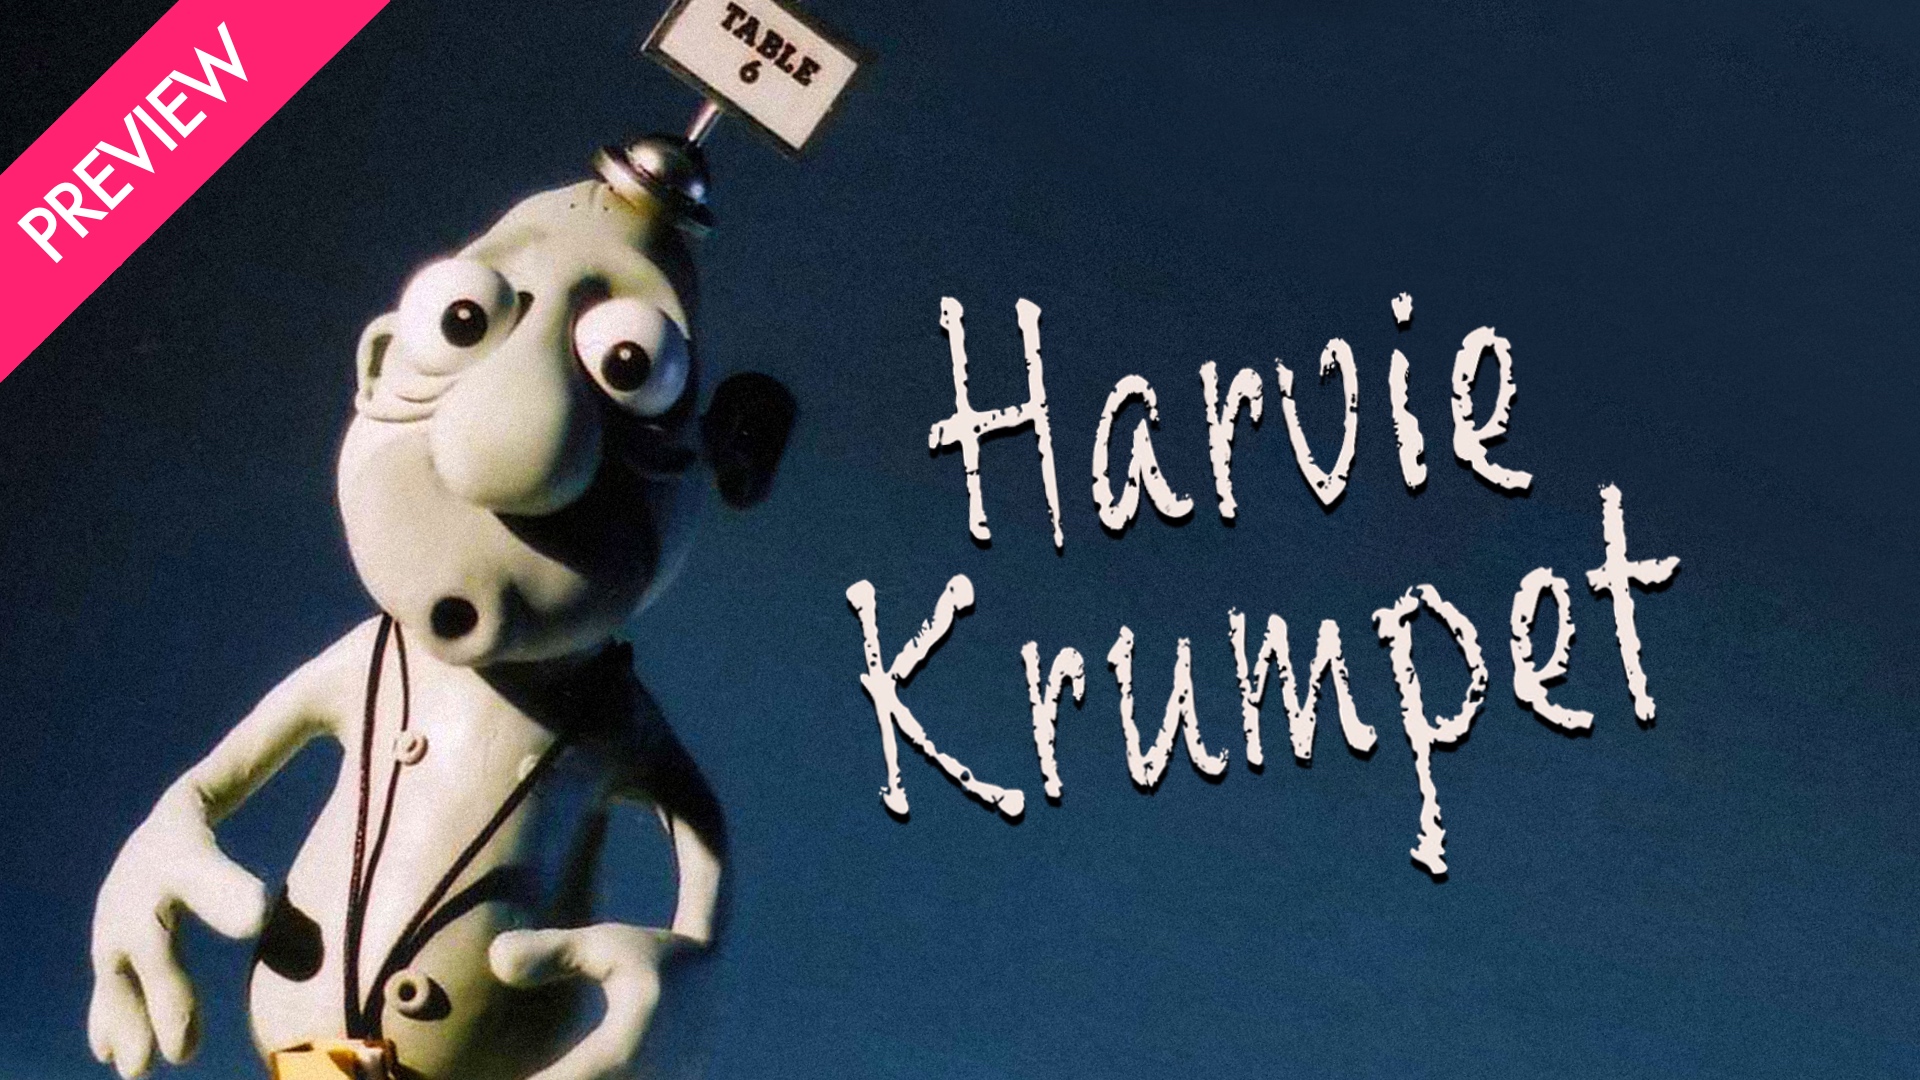 Harvey Krumpet